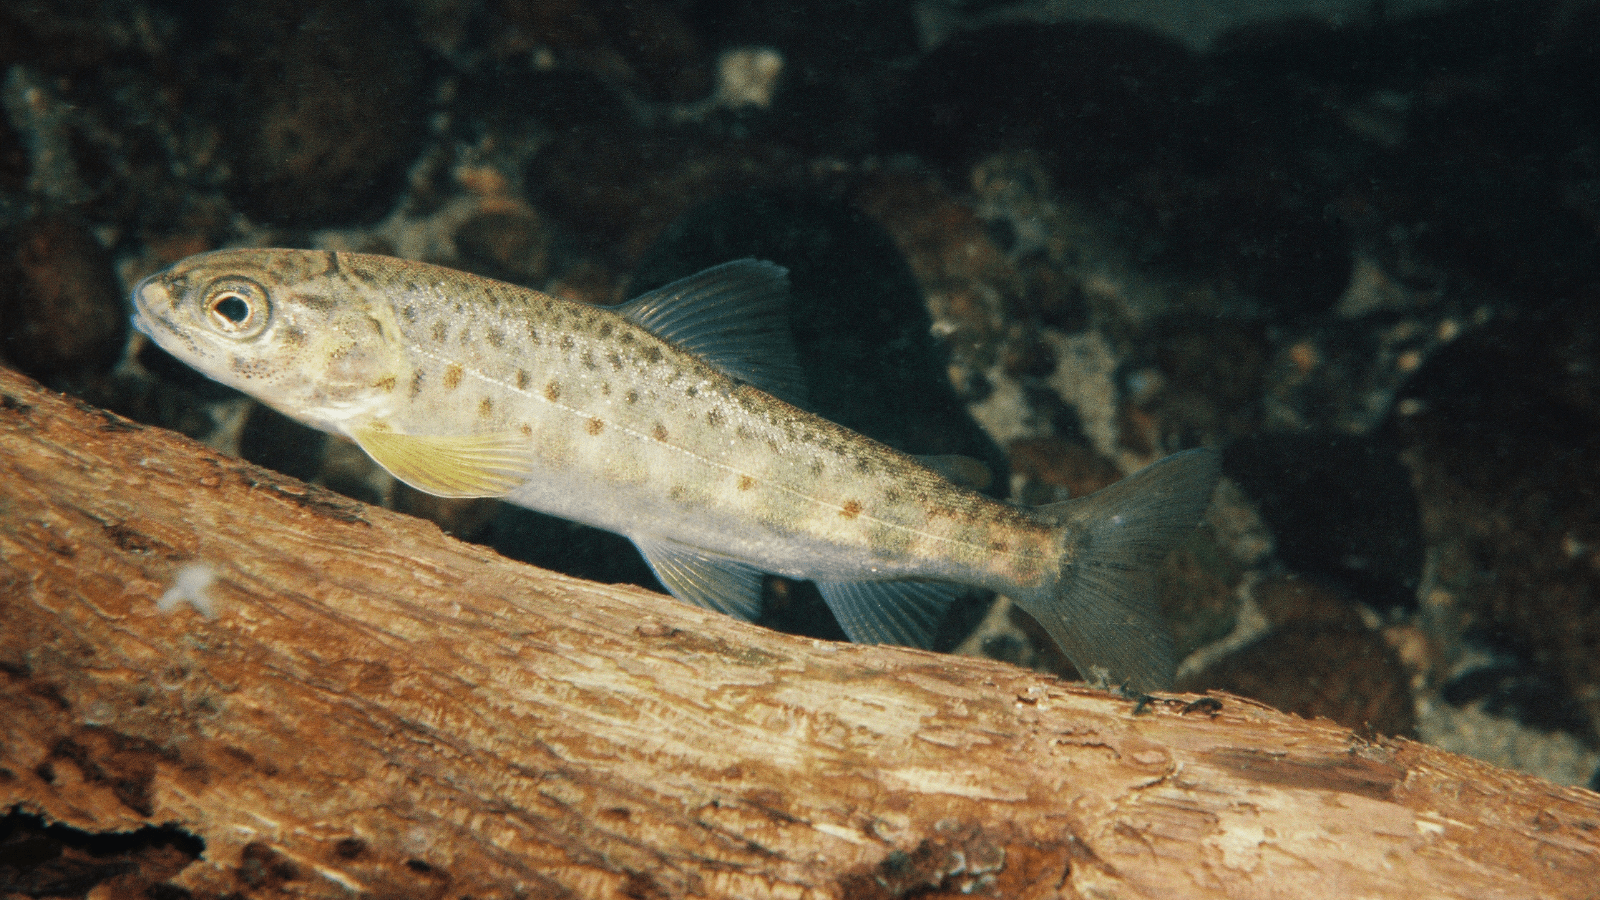 Juvenile Atlantic salmon in Scatter Creek, Washington.